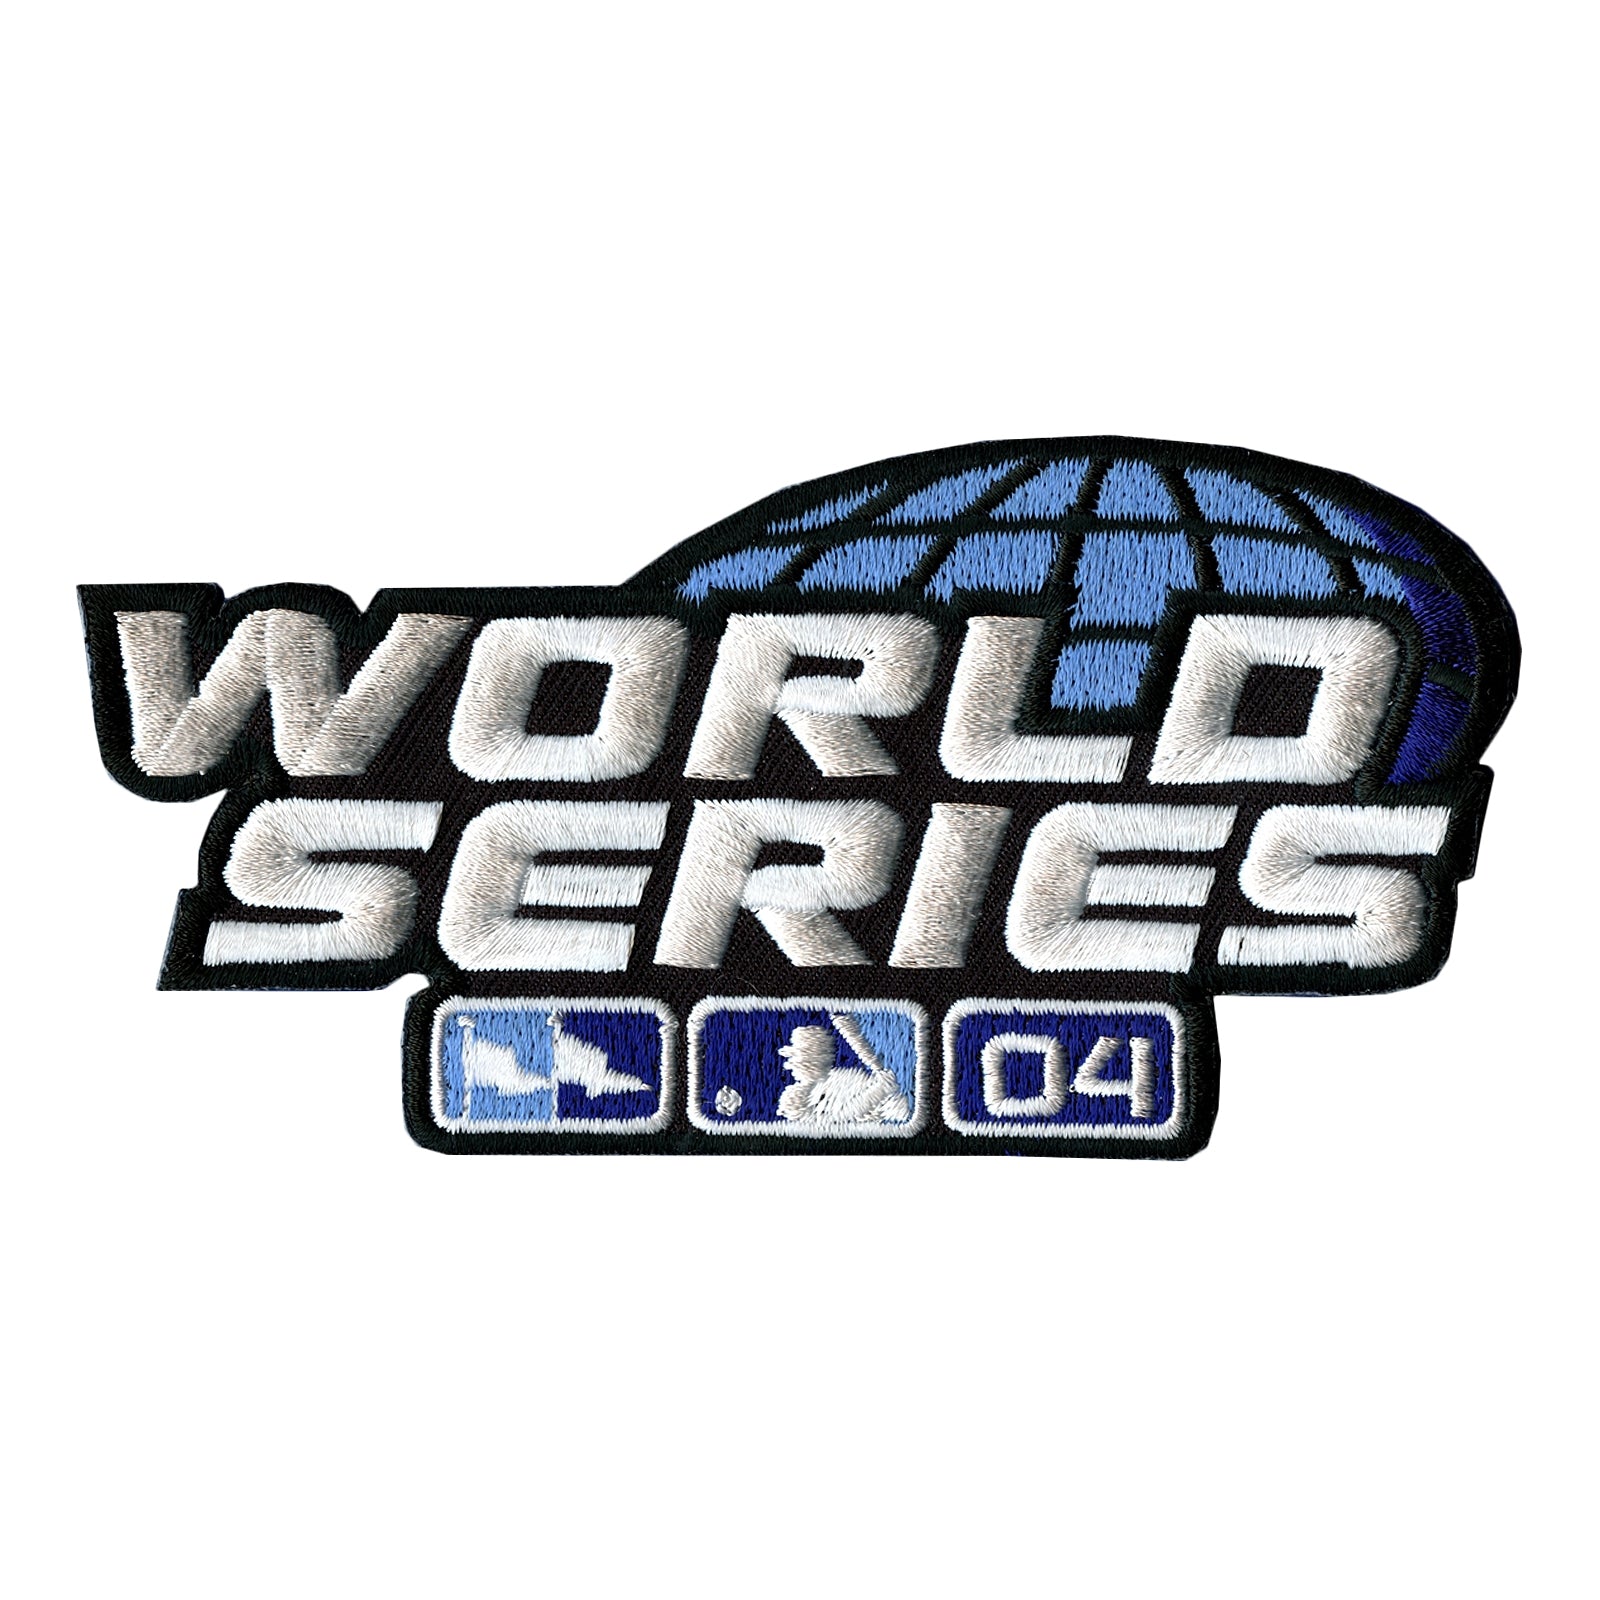 2004 MLB World Series Logo Jersey Patch St. Louis Cardinals vs